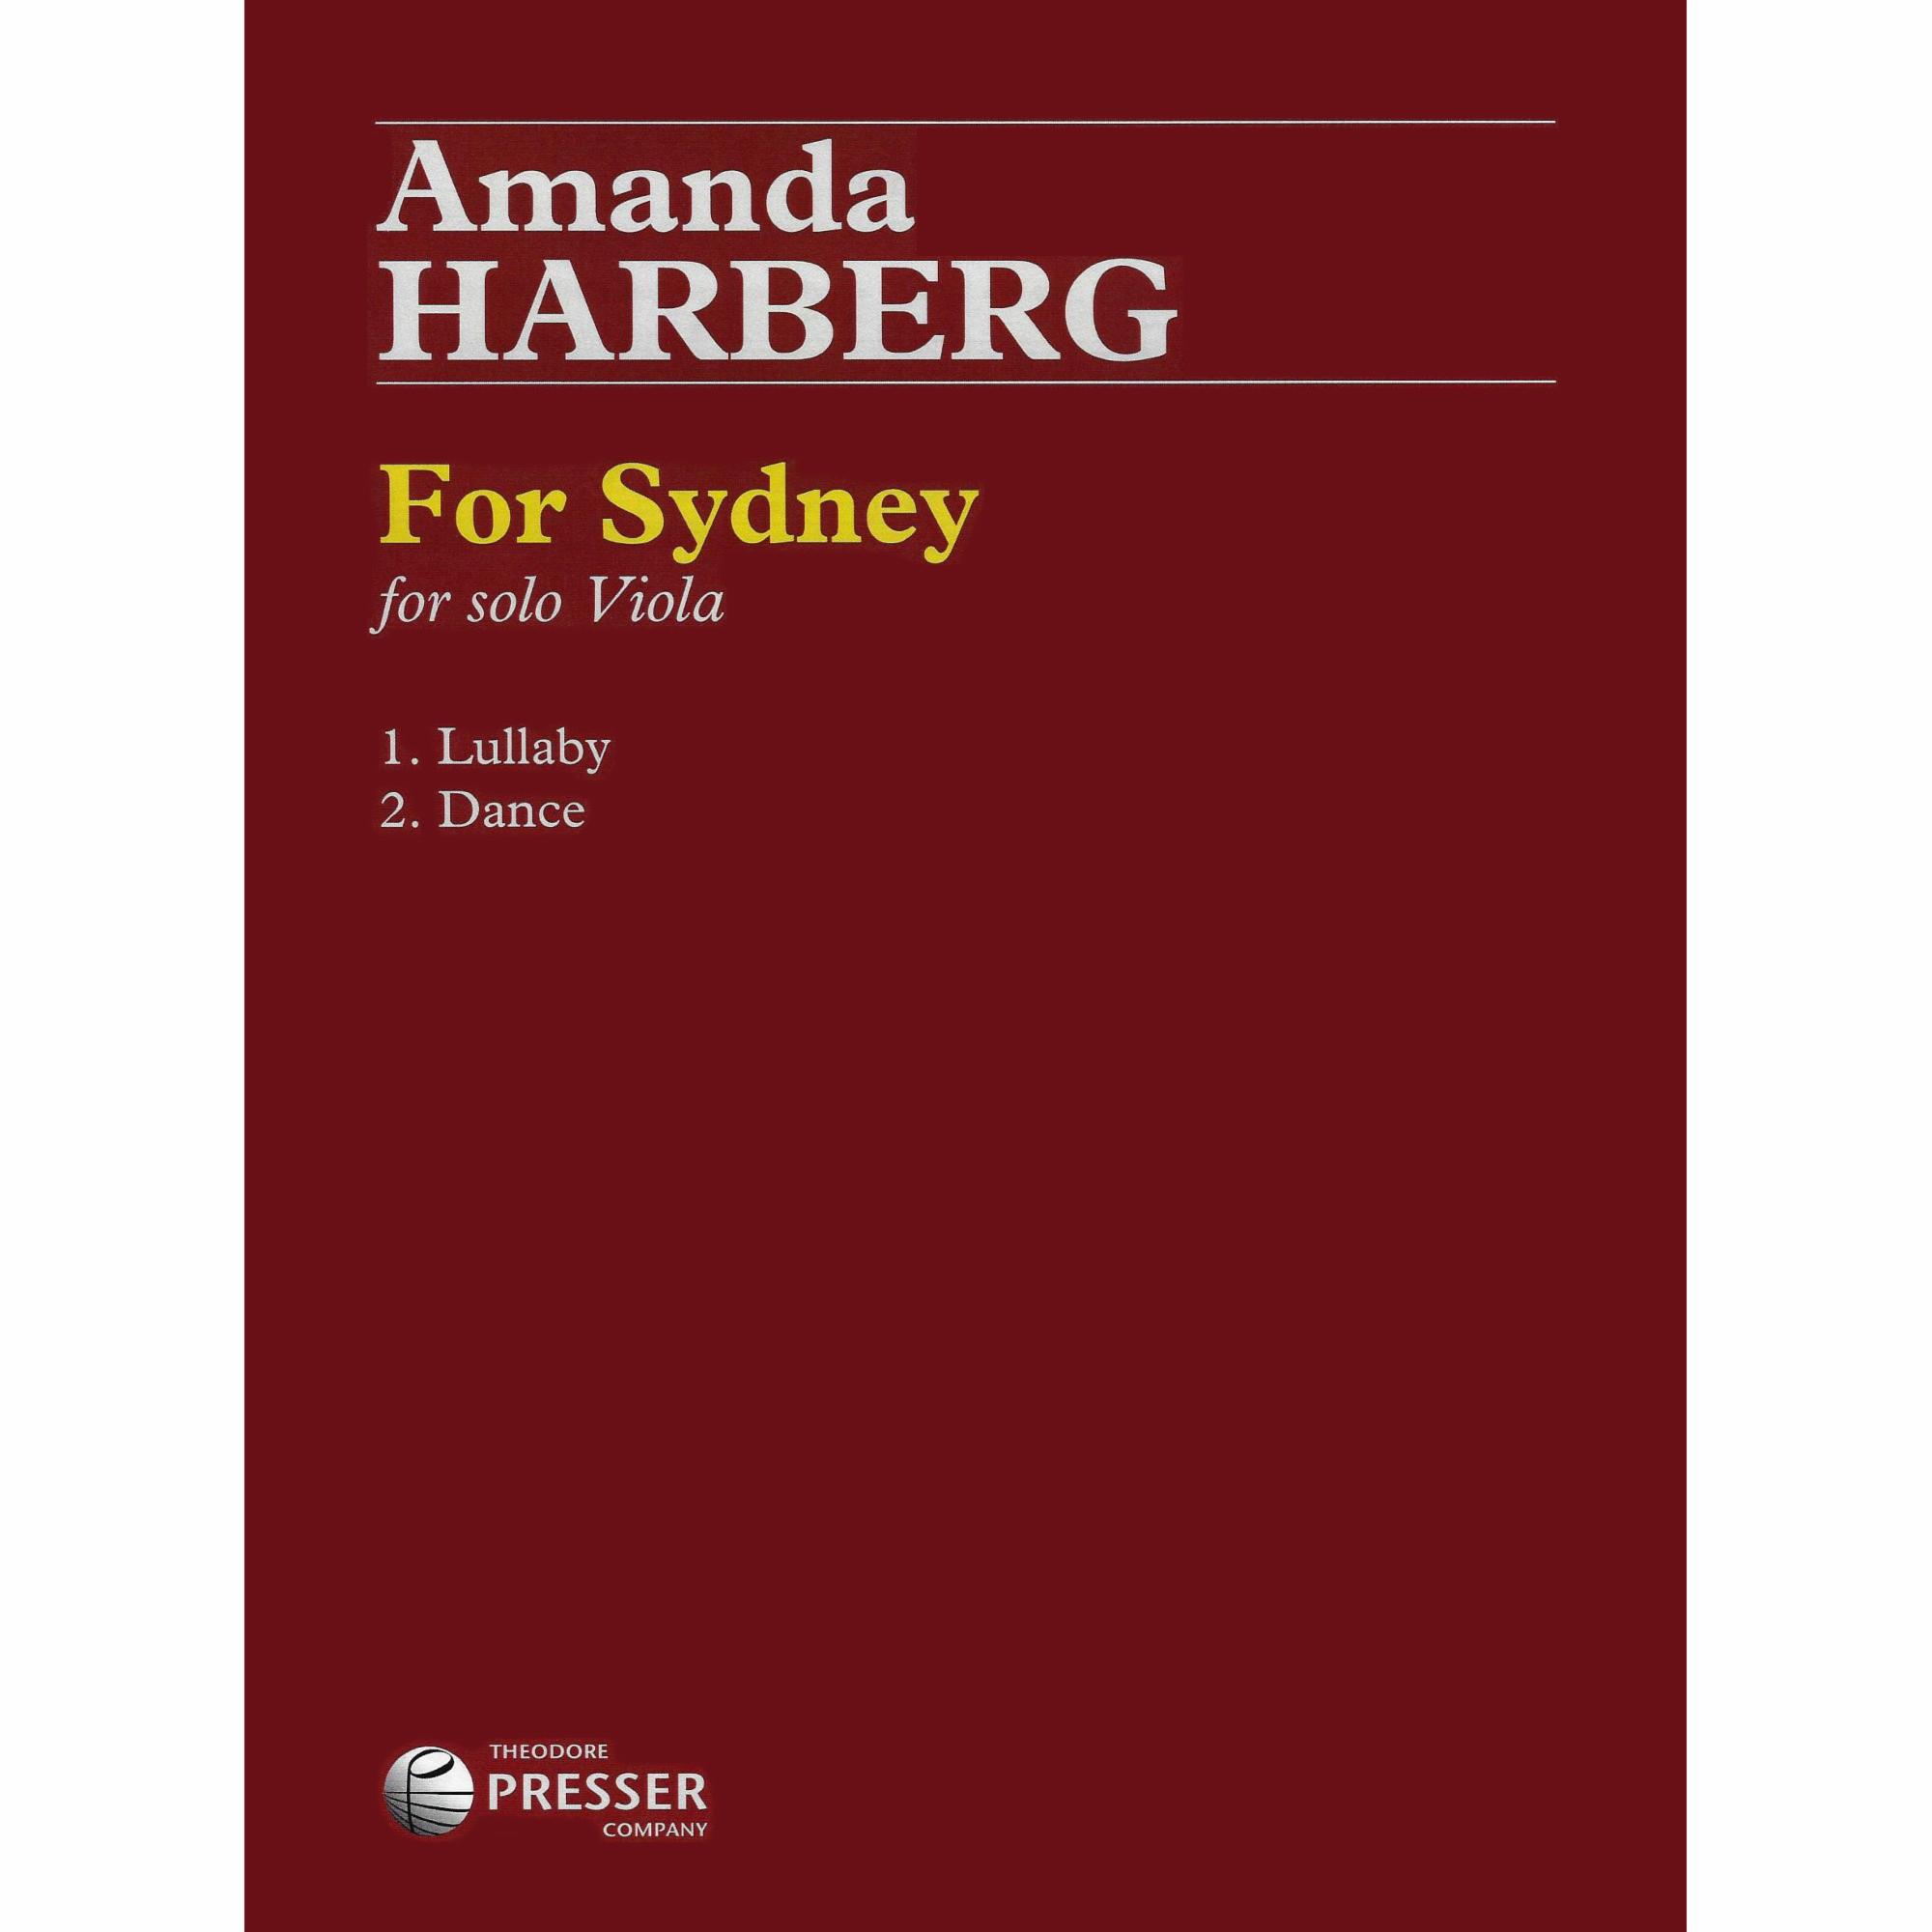 Harberg -- For Sydney for Solo Viola